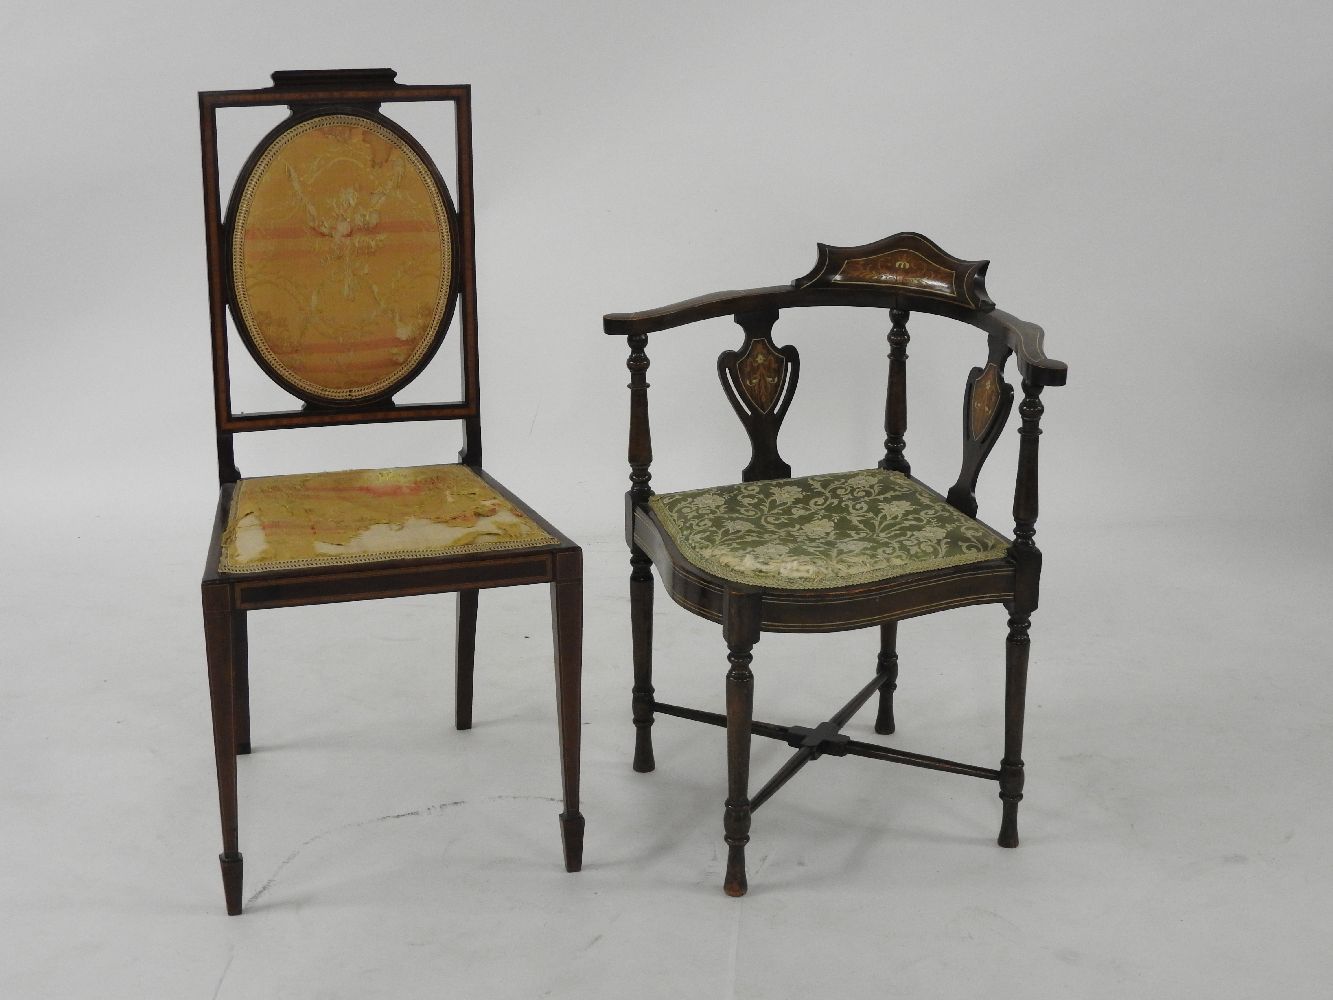 Two Edwardian inlaid mahogany chairs